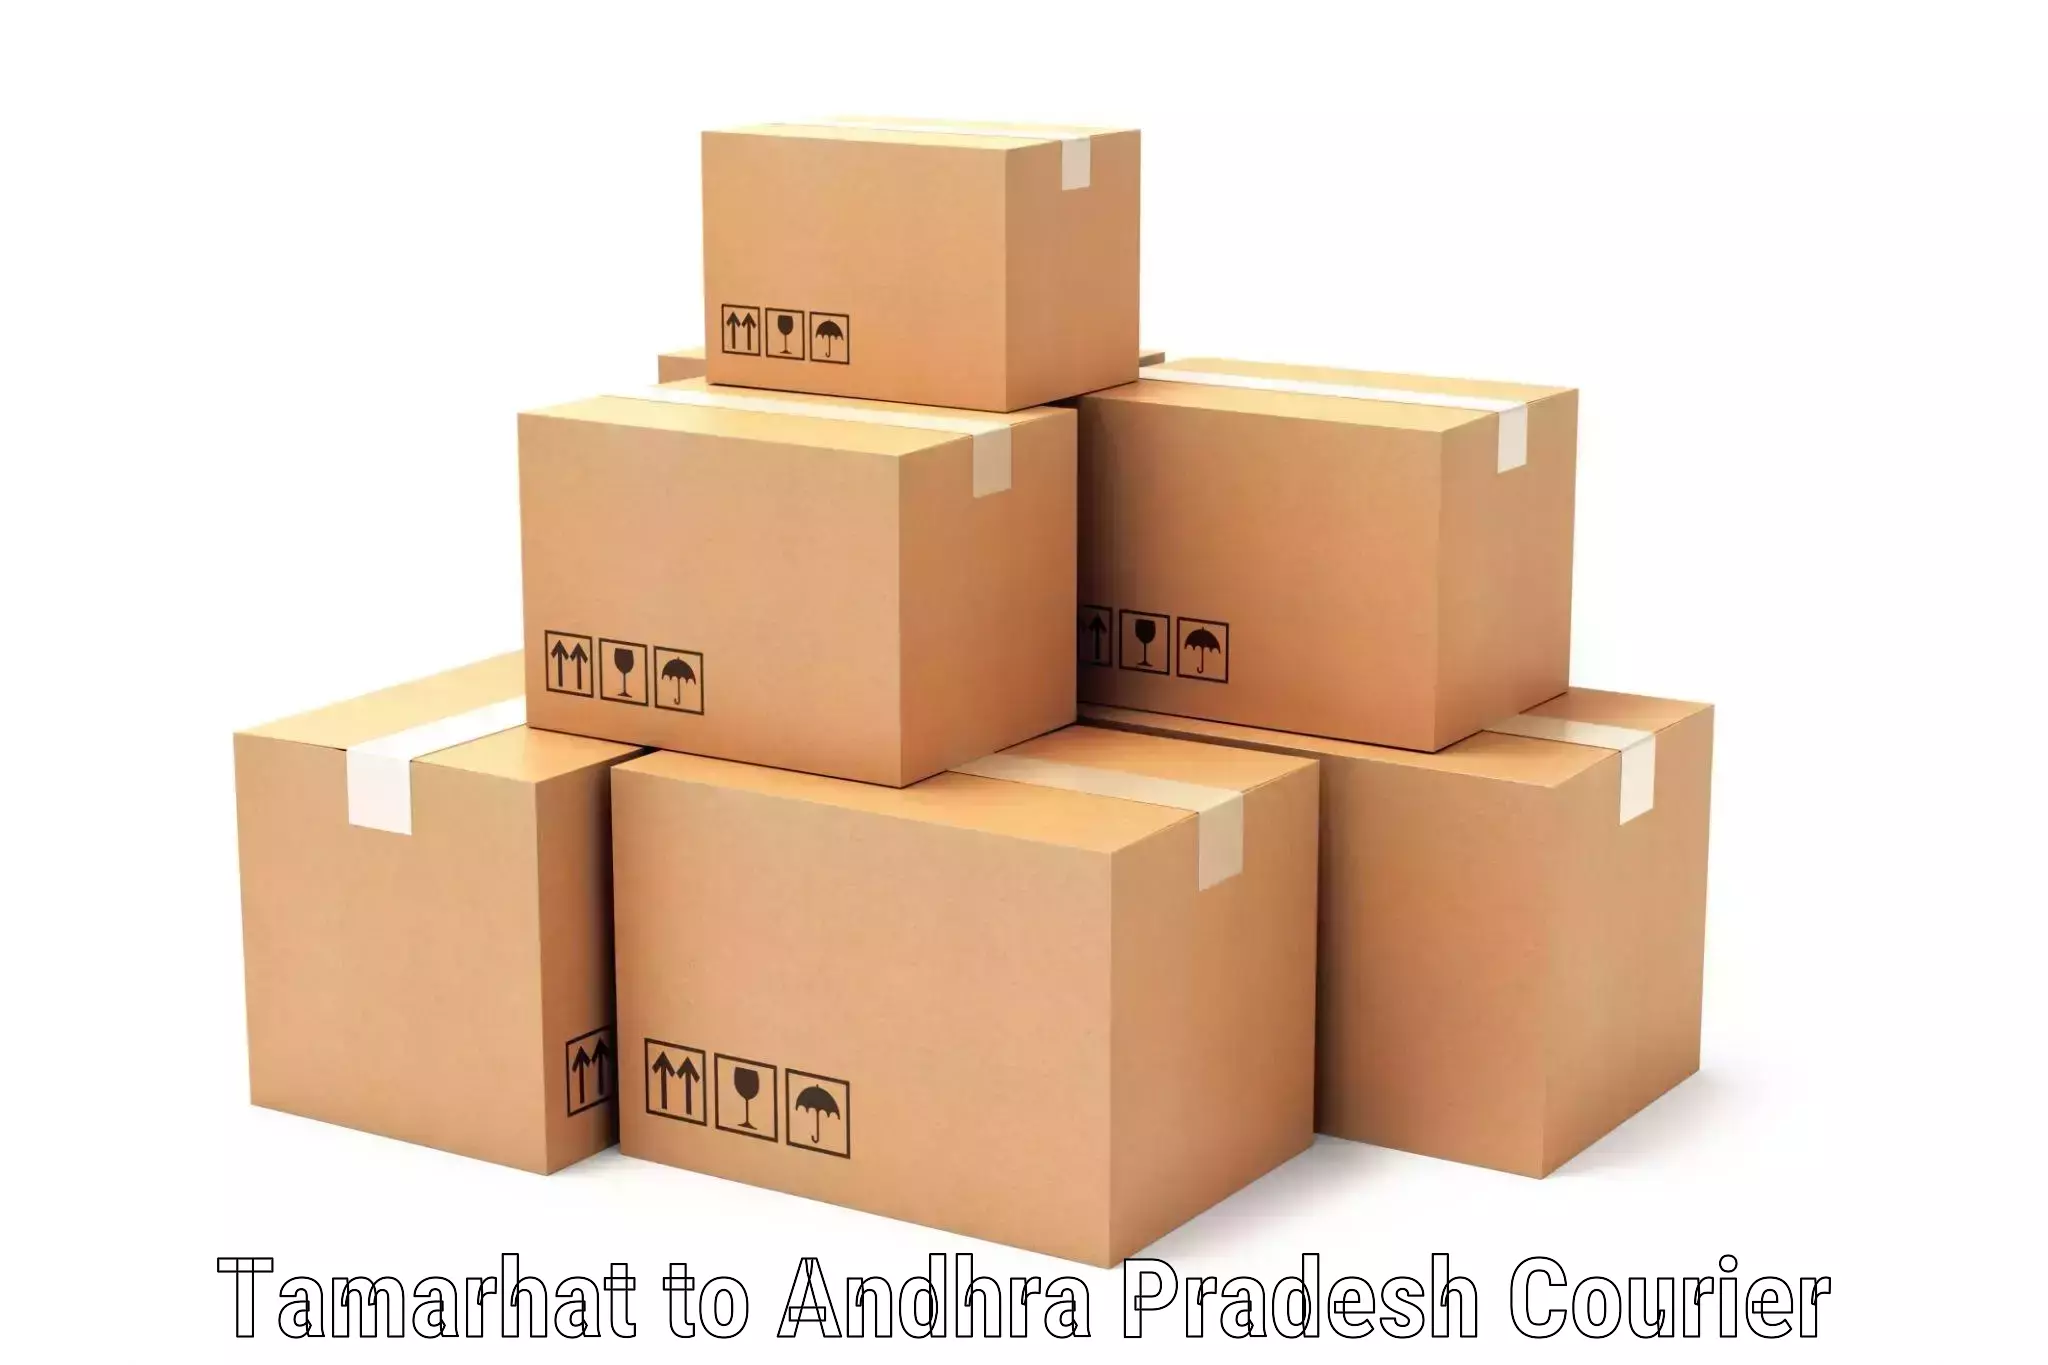 Customizable delivery plans Tamarhat to Narsipatnam